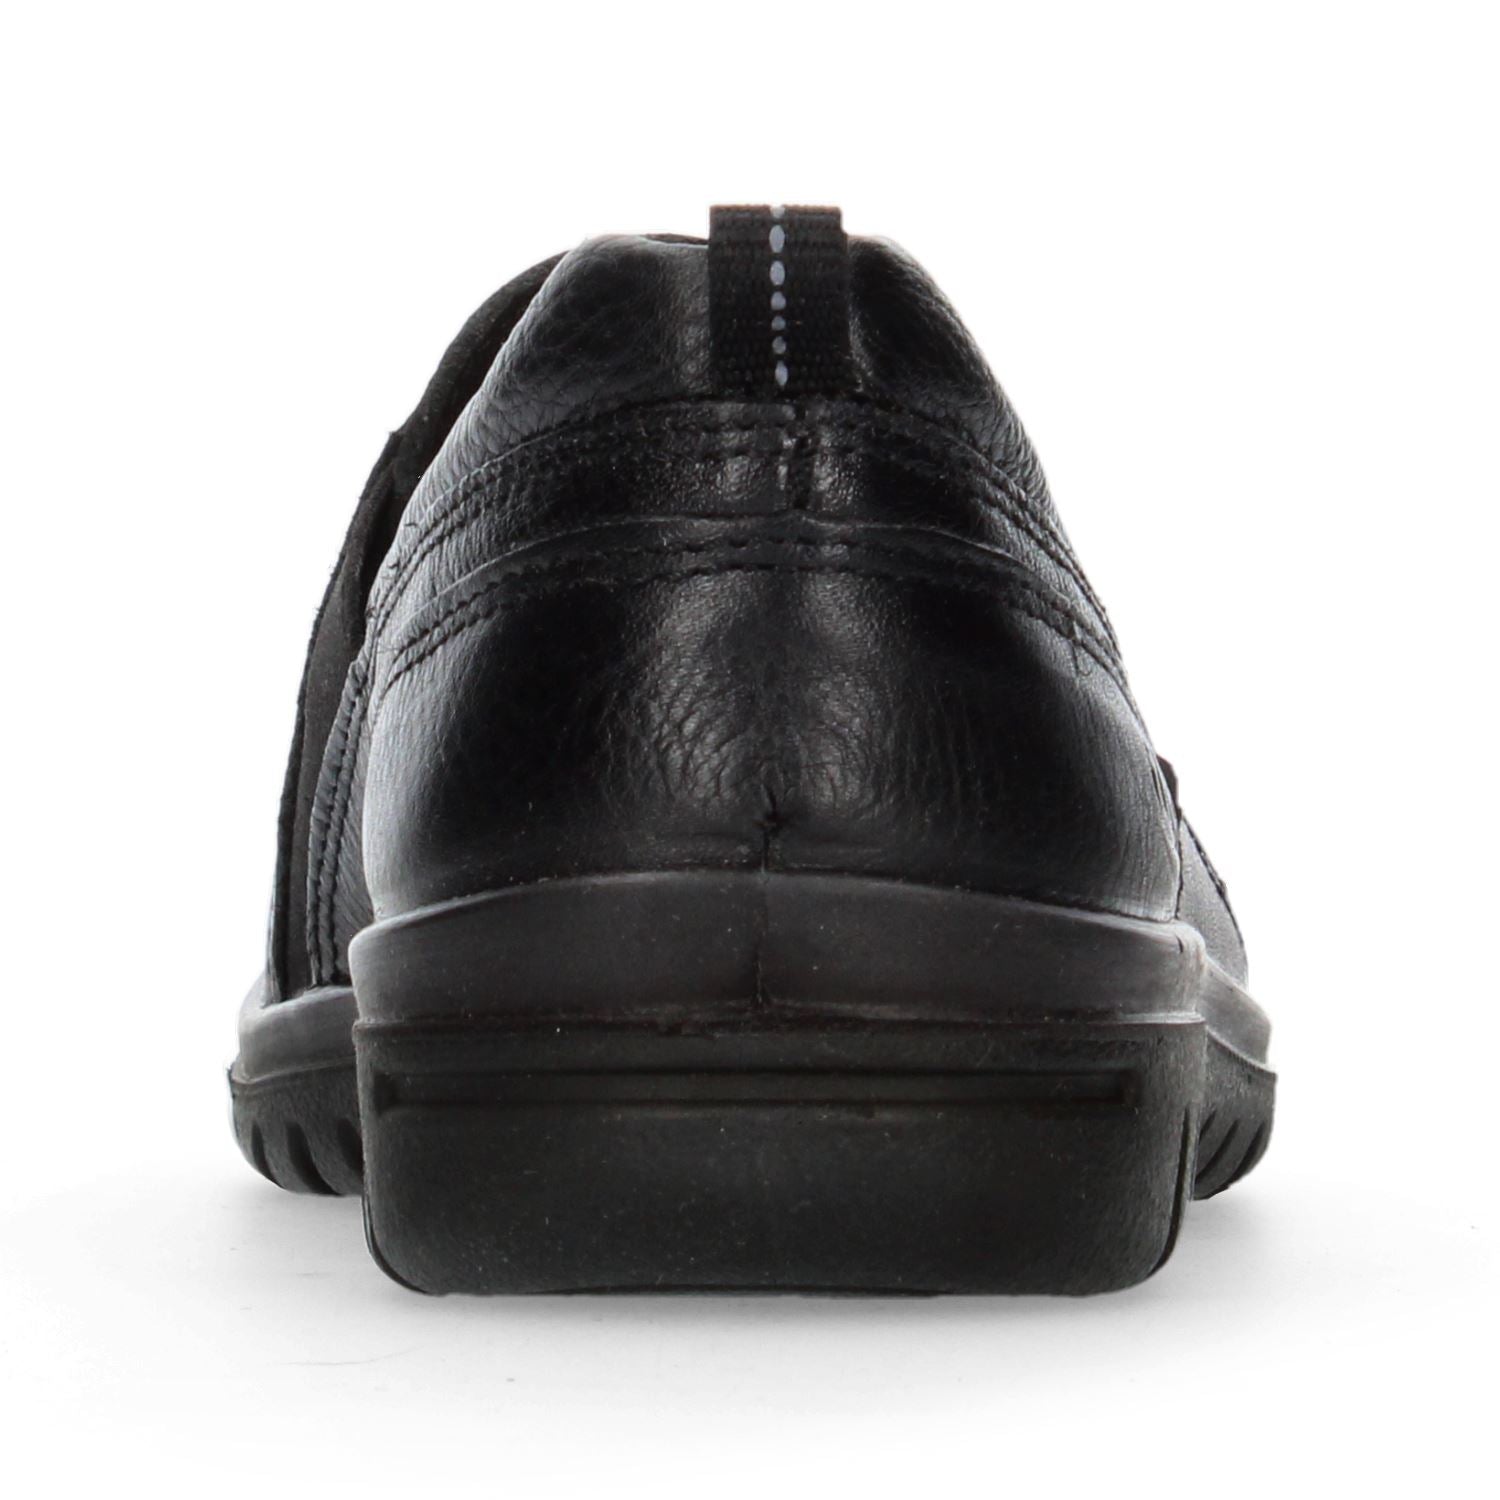 Zapato Confort Flexi Negro para Mujer [FFF3203] División_Calzado FLEXI 